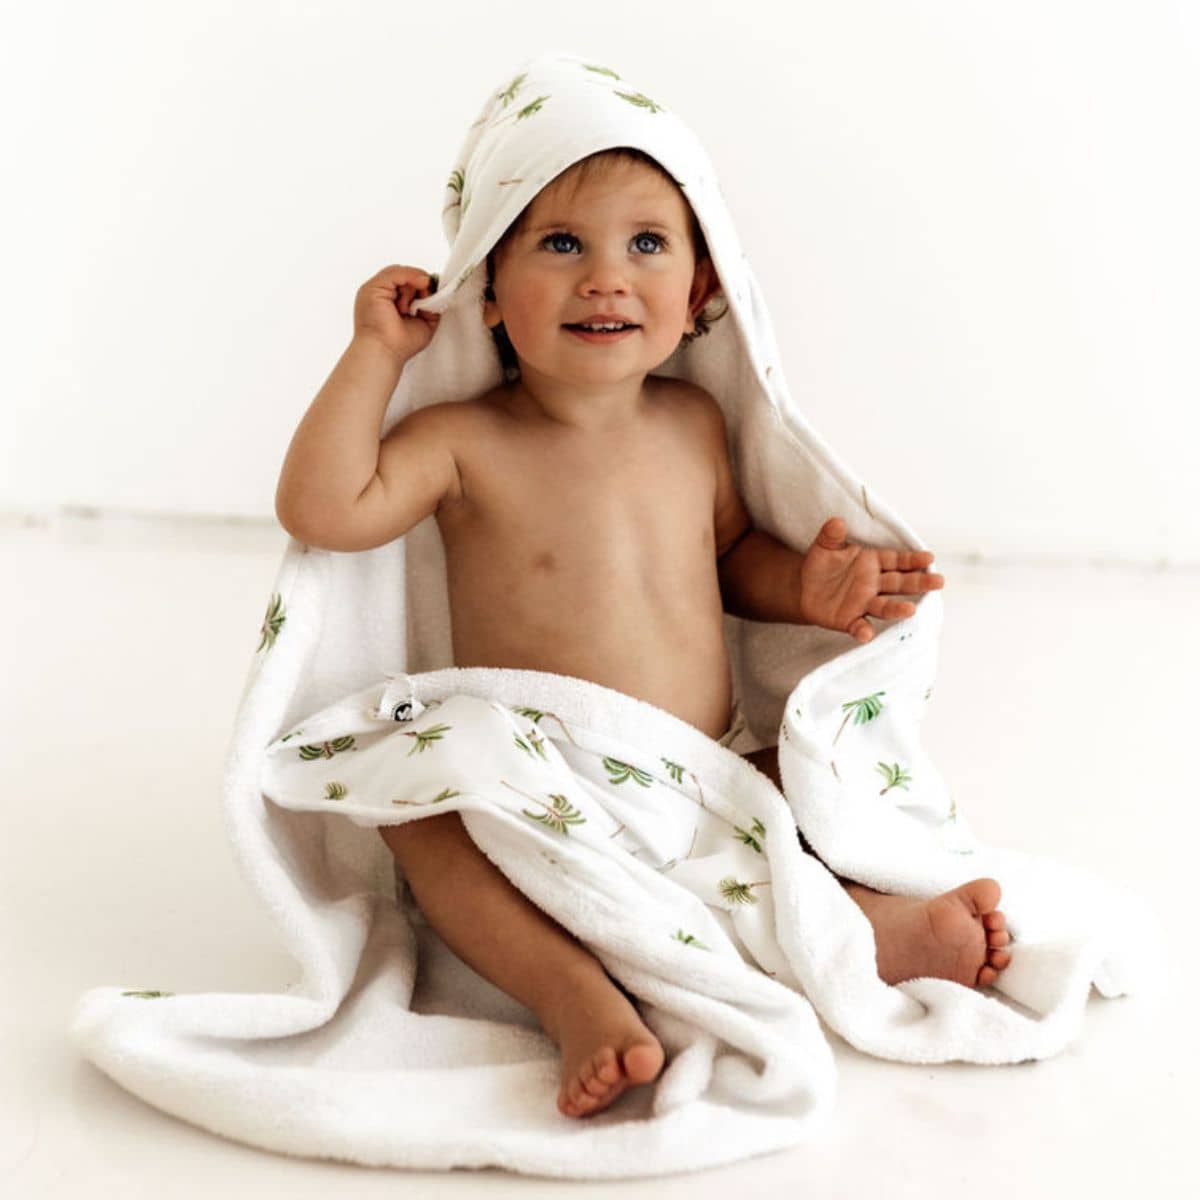 Snuggle Hunny Organic Hooded Baby Towel - Green Palm